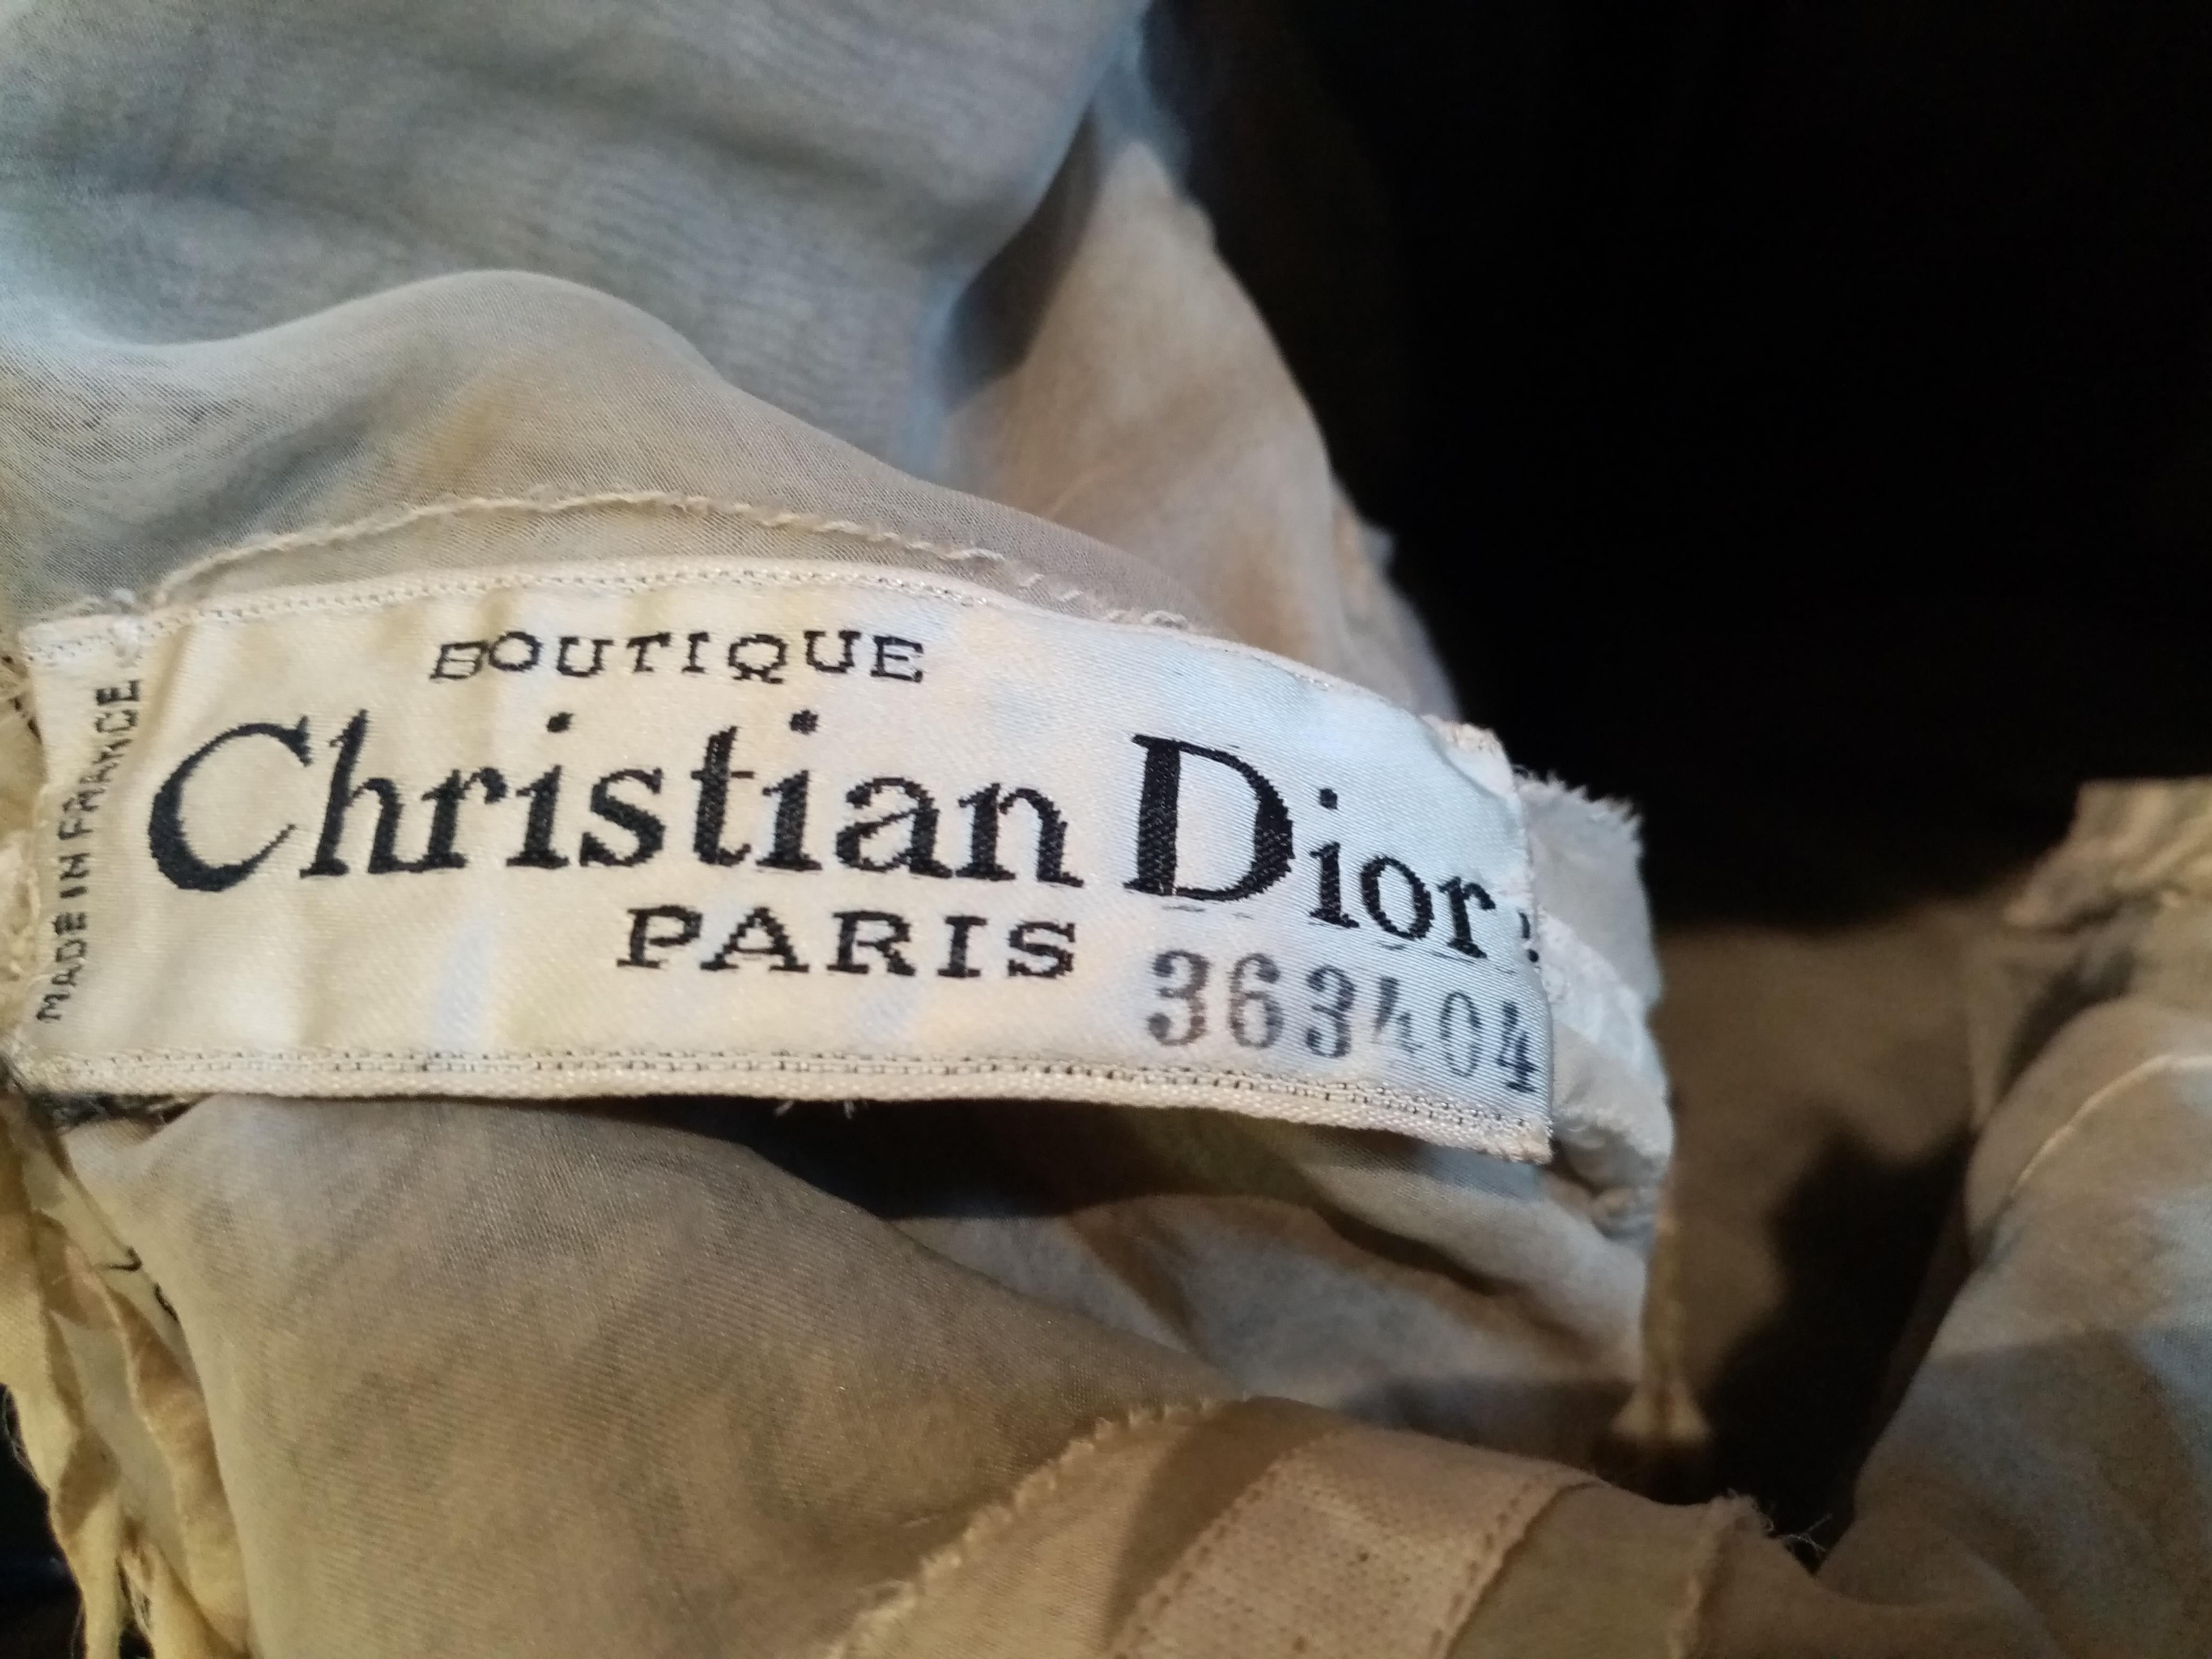 Christian Dior Ball Gown in black tulle & satin appliqué N° 363404 Circa 1955 8